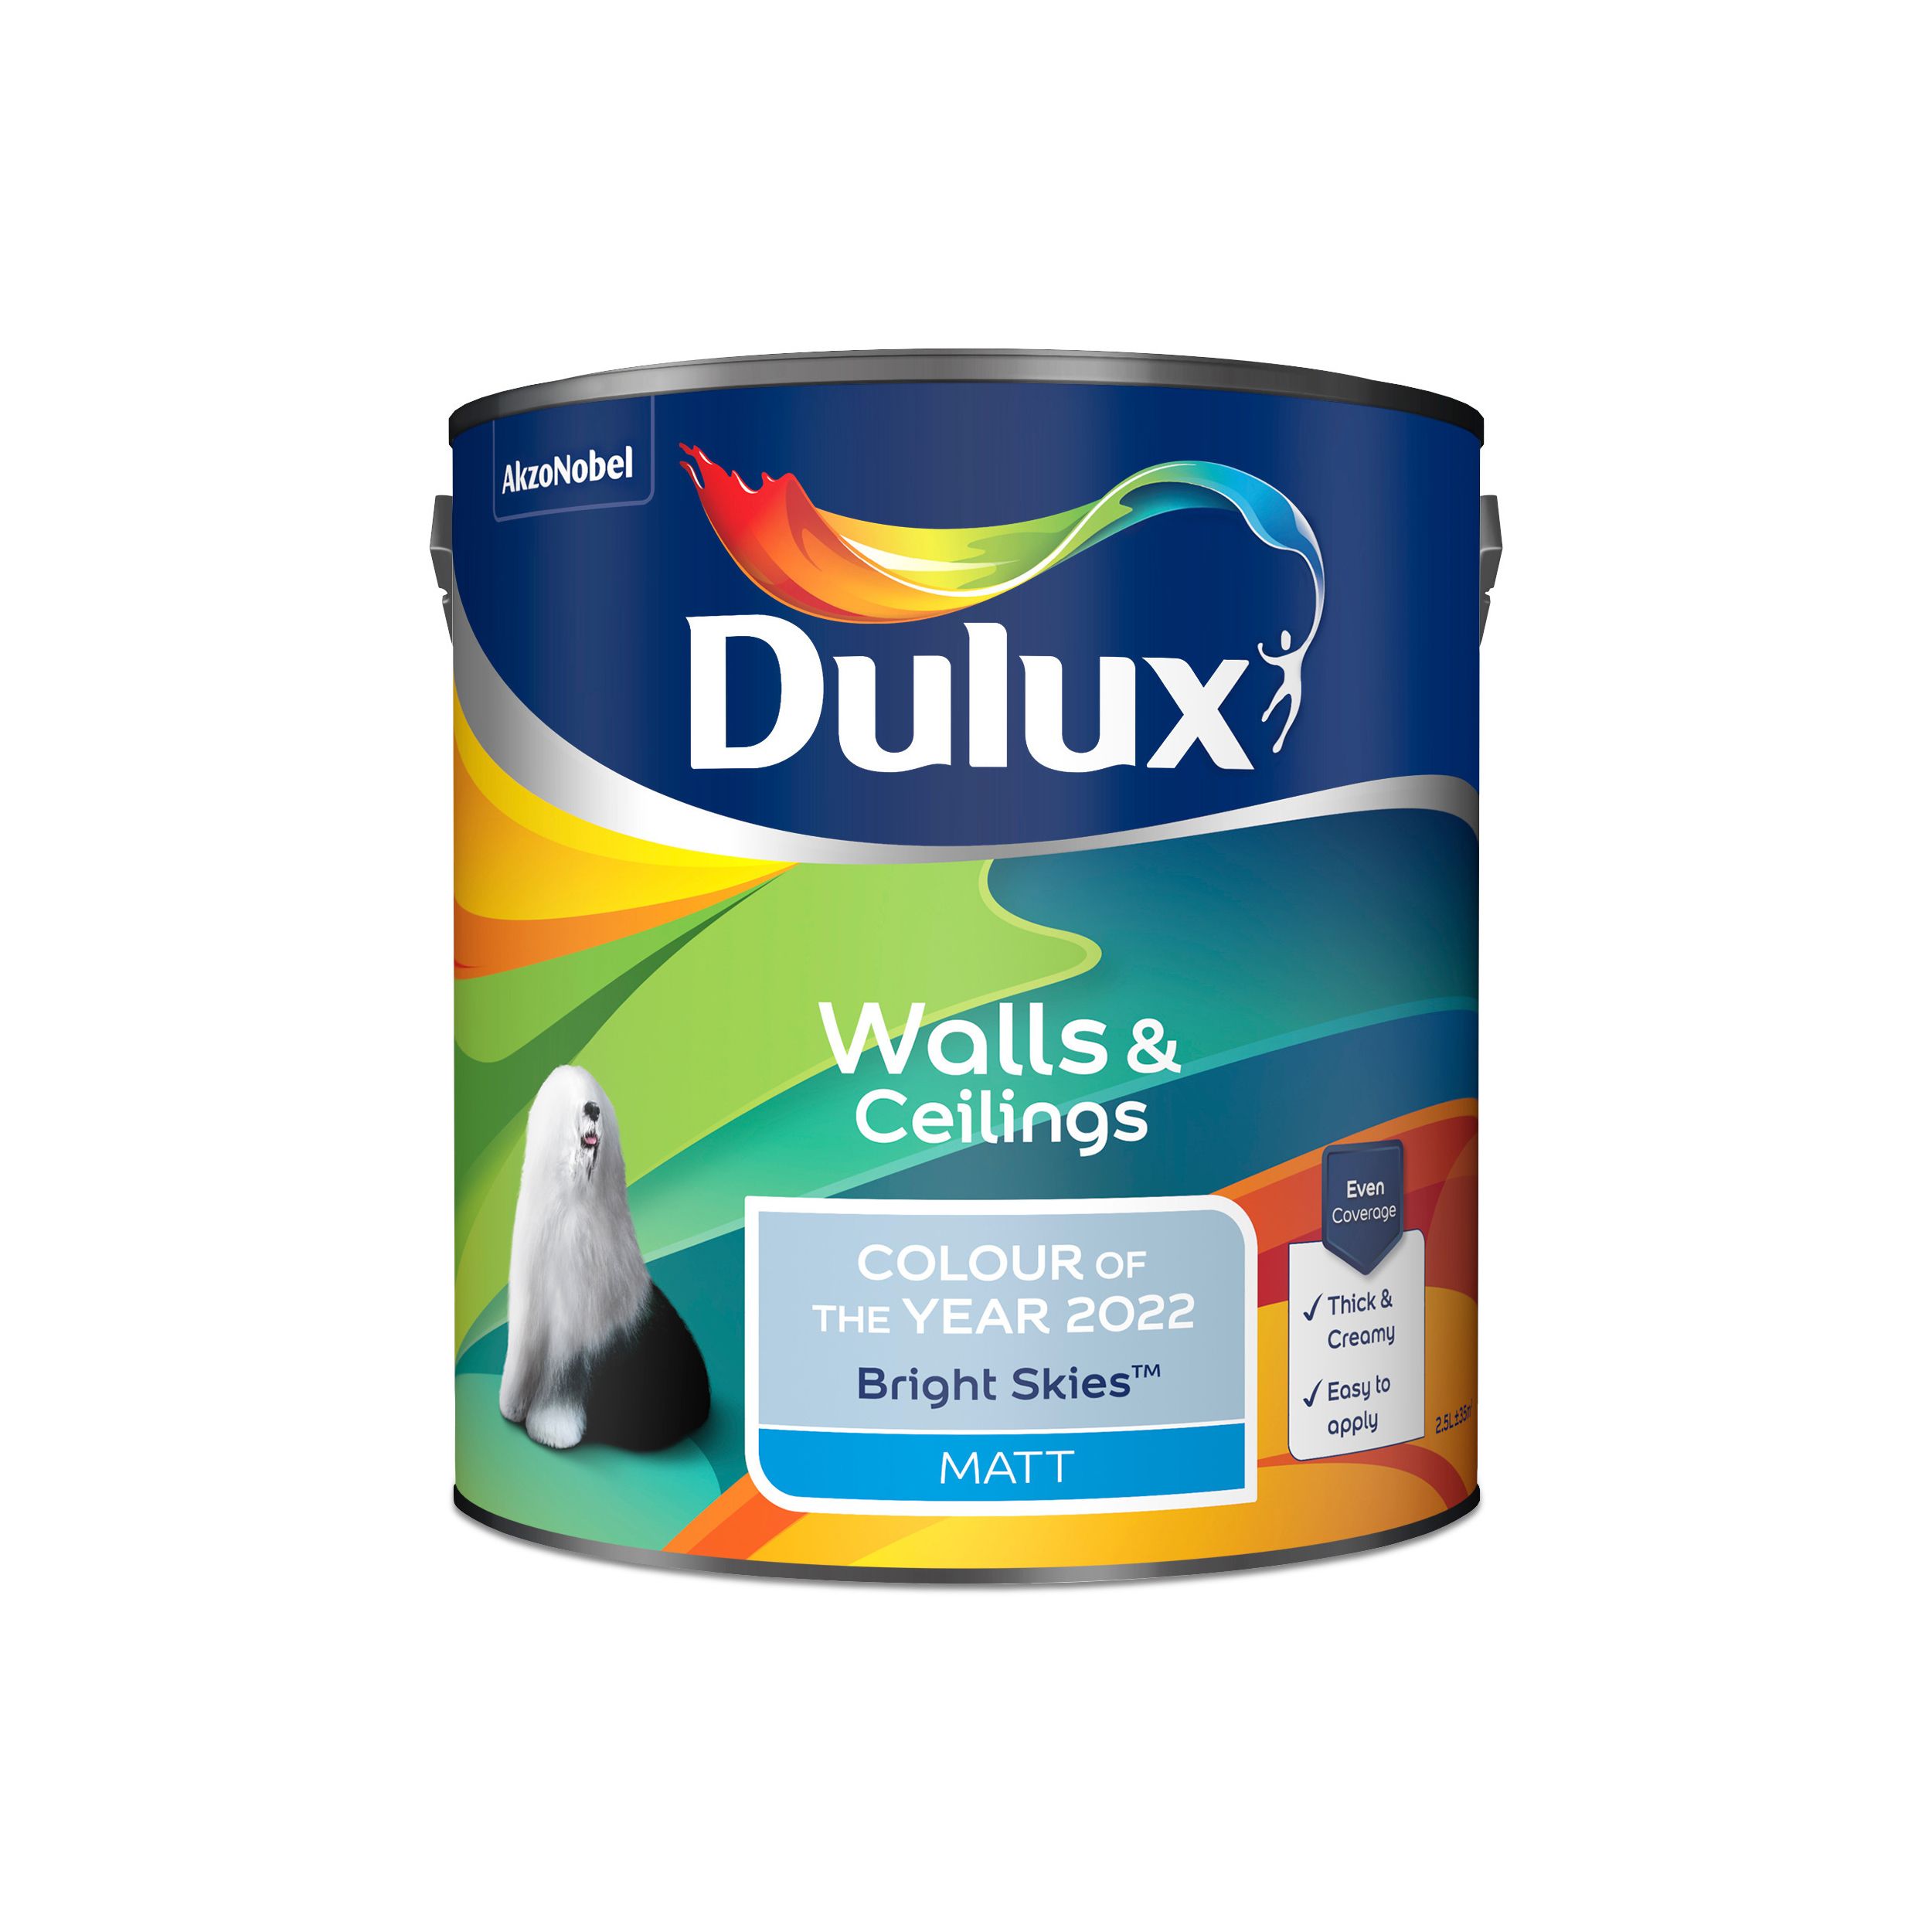 Dulux Walls & ceilings Bright Skies Matt Emulsion paint, 2.5L